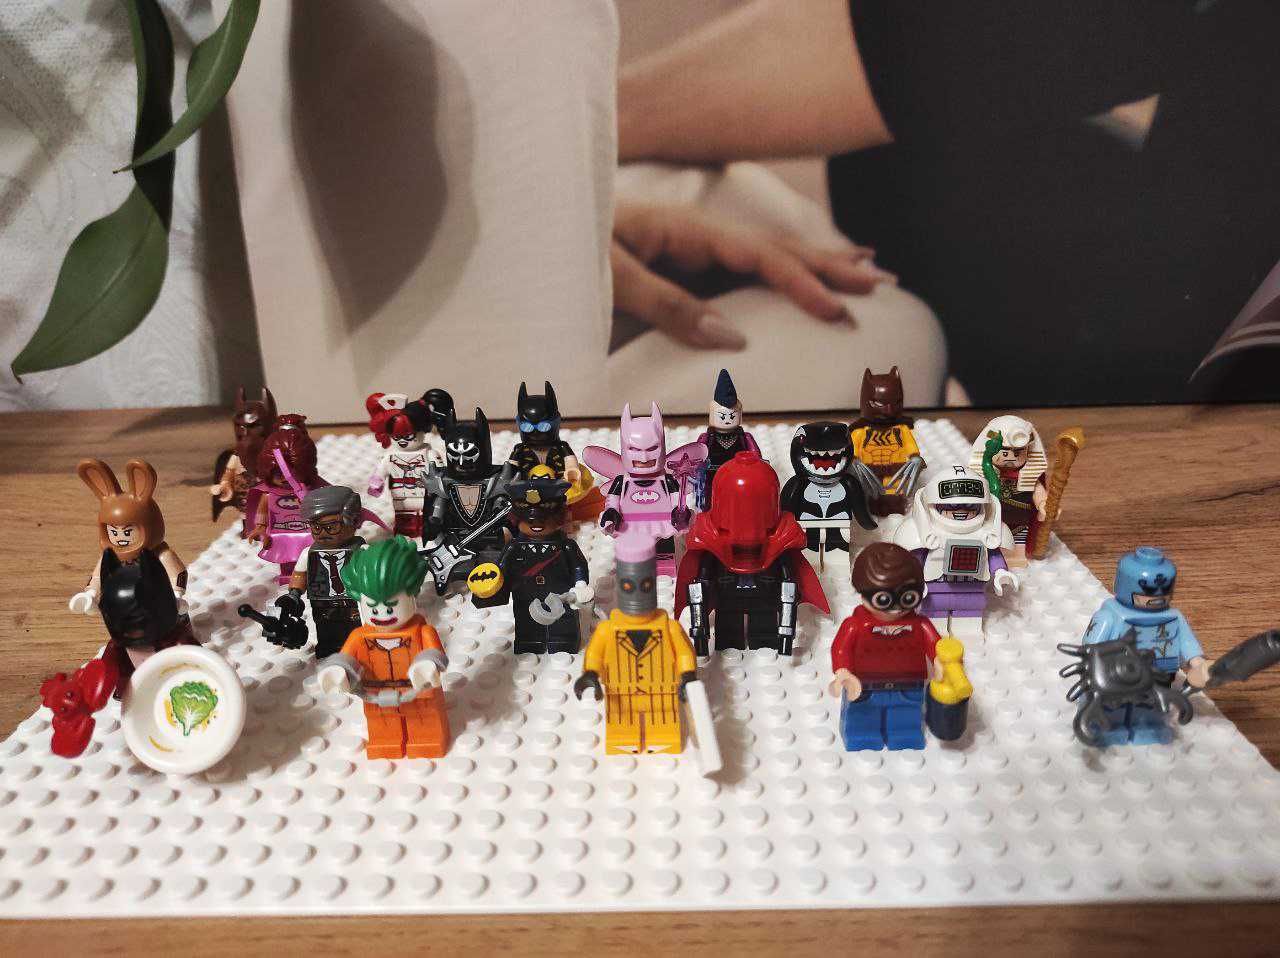 LEGO: Минифигурки Batman Movie, Series 1 (71017)